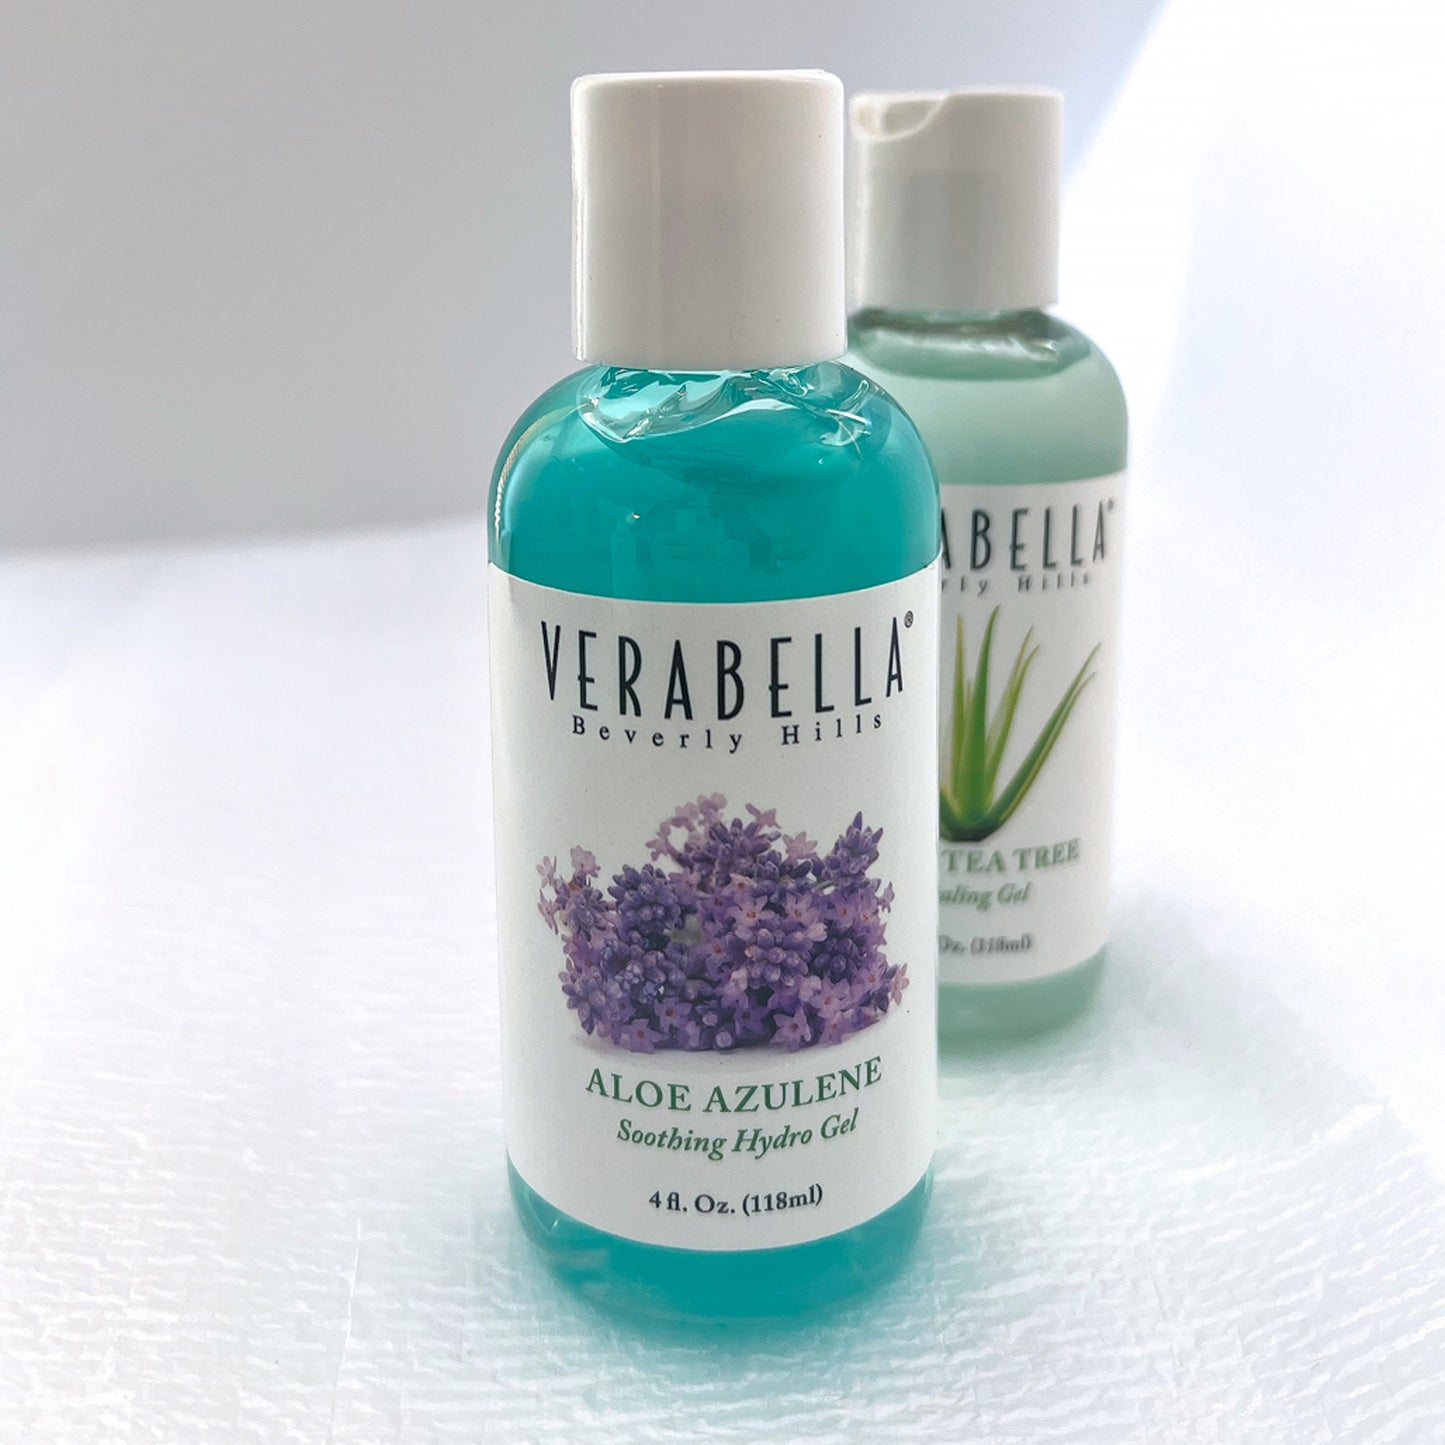 Container - Verabella Aloe Azulene Soothing Hydro Gel